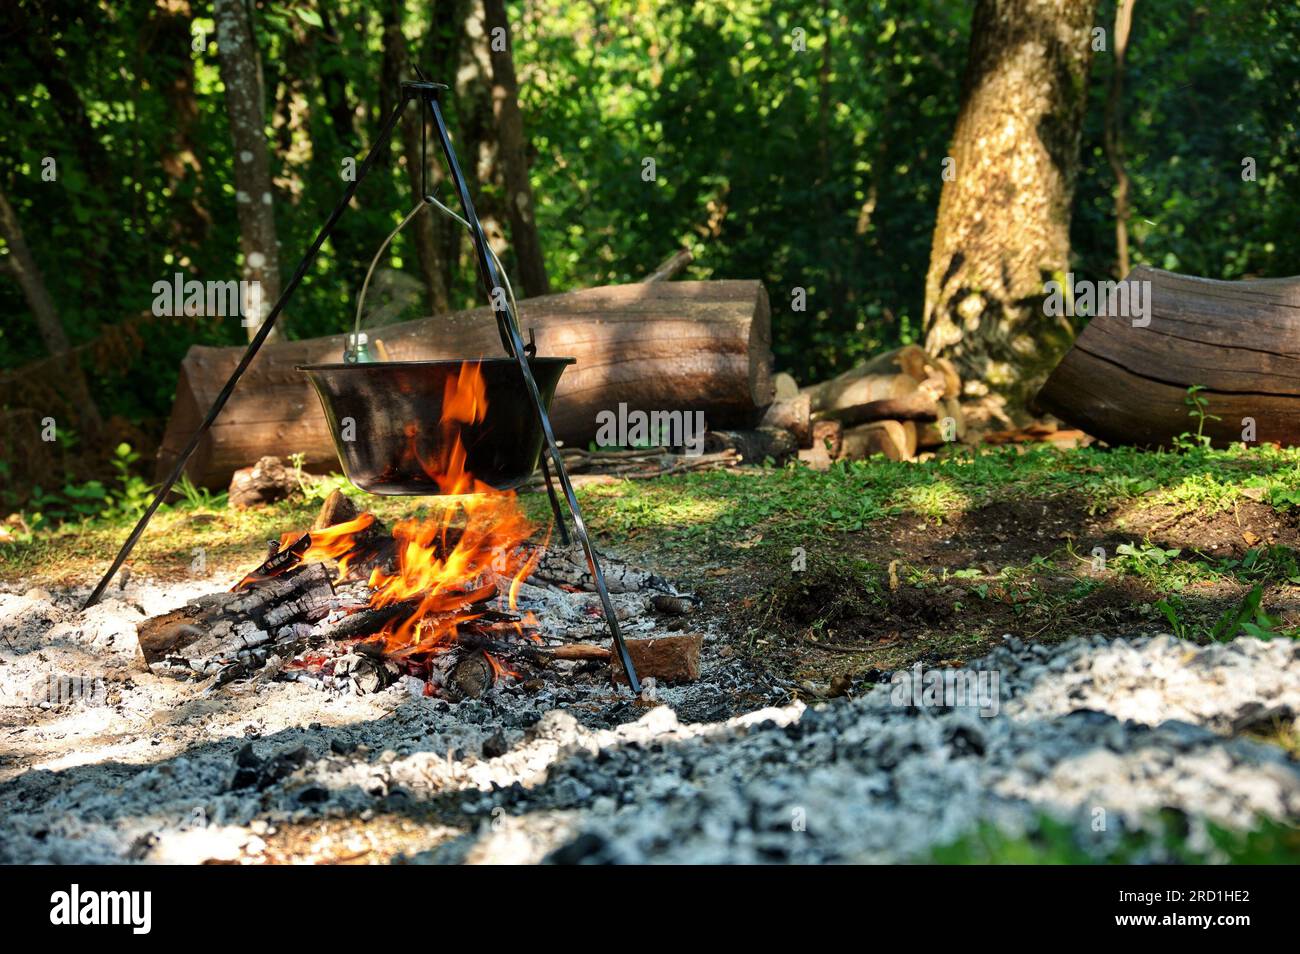 Preparing food on campfire in enamel pot Stock Photo